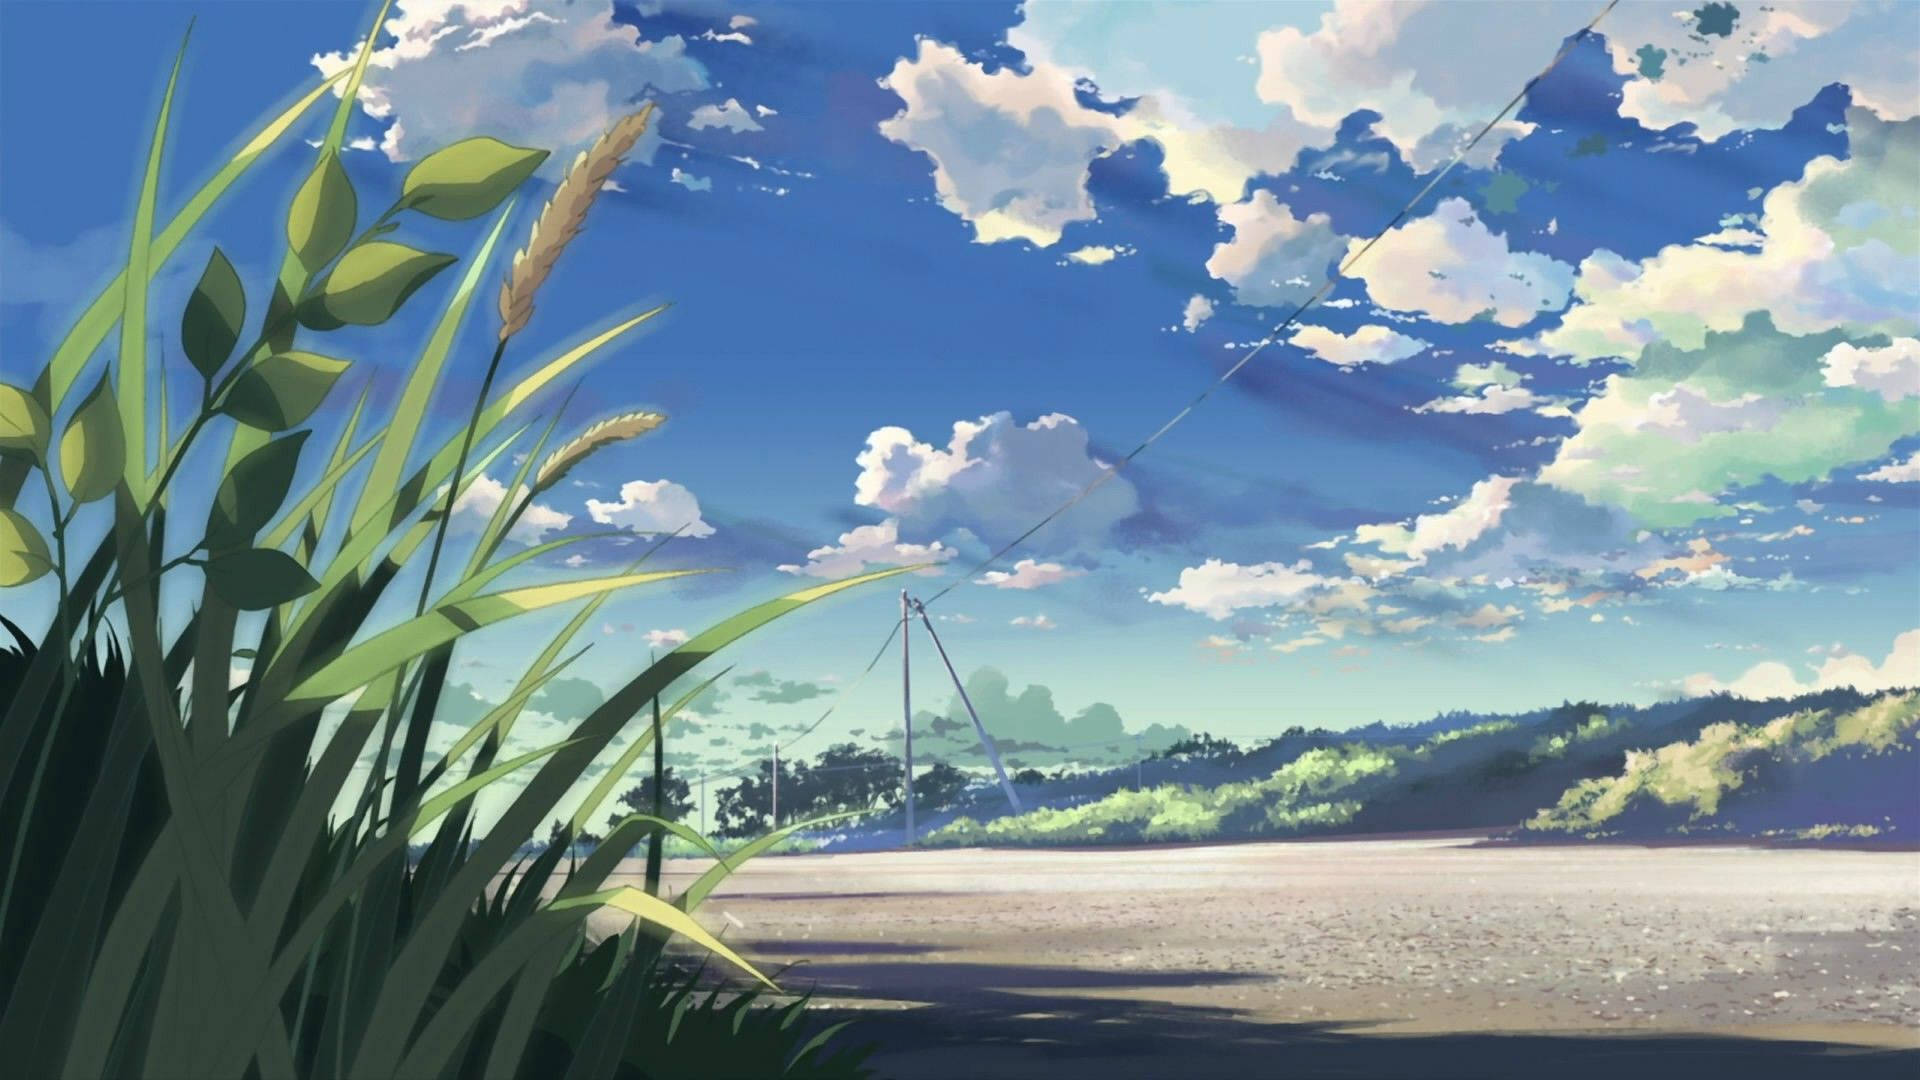 Anime Aesthetic Scenery Wallpaper